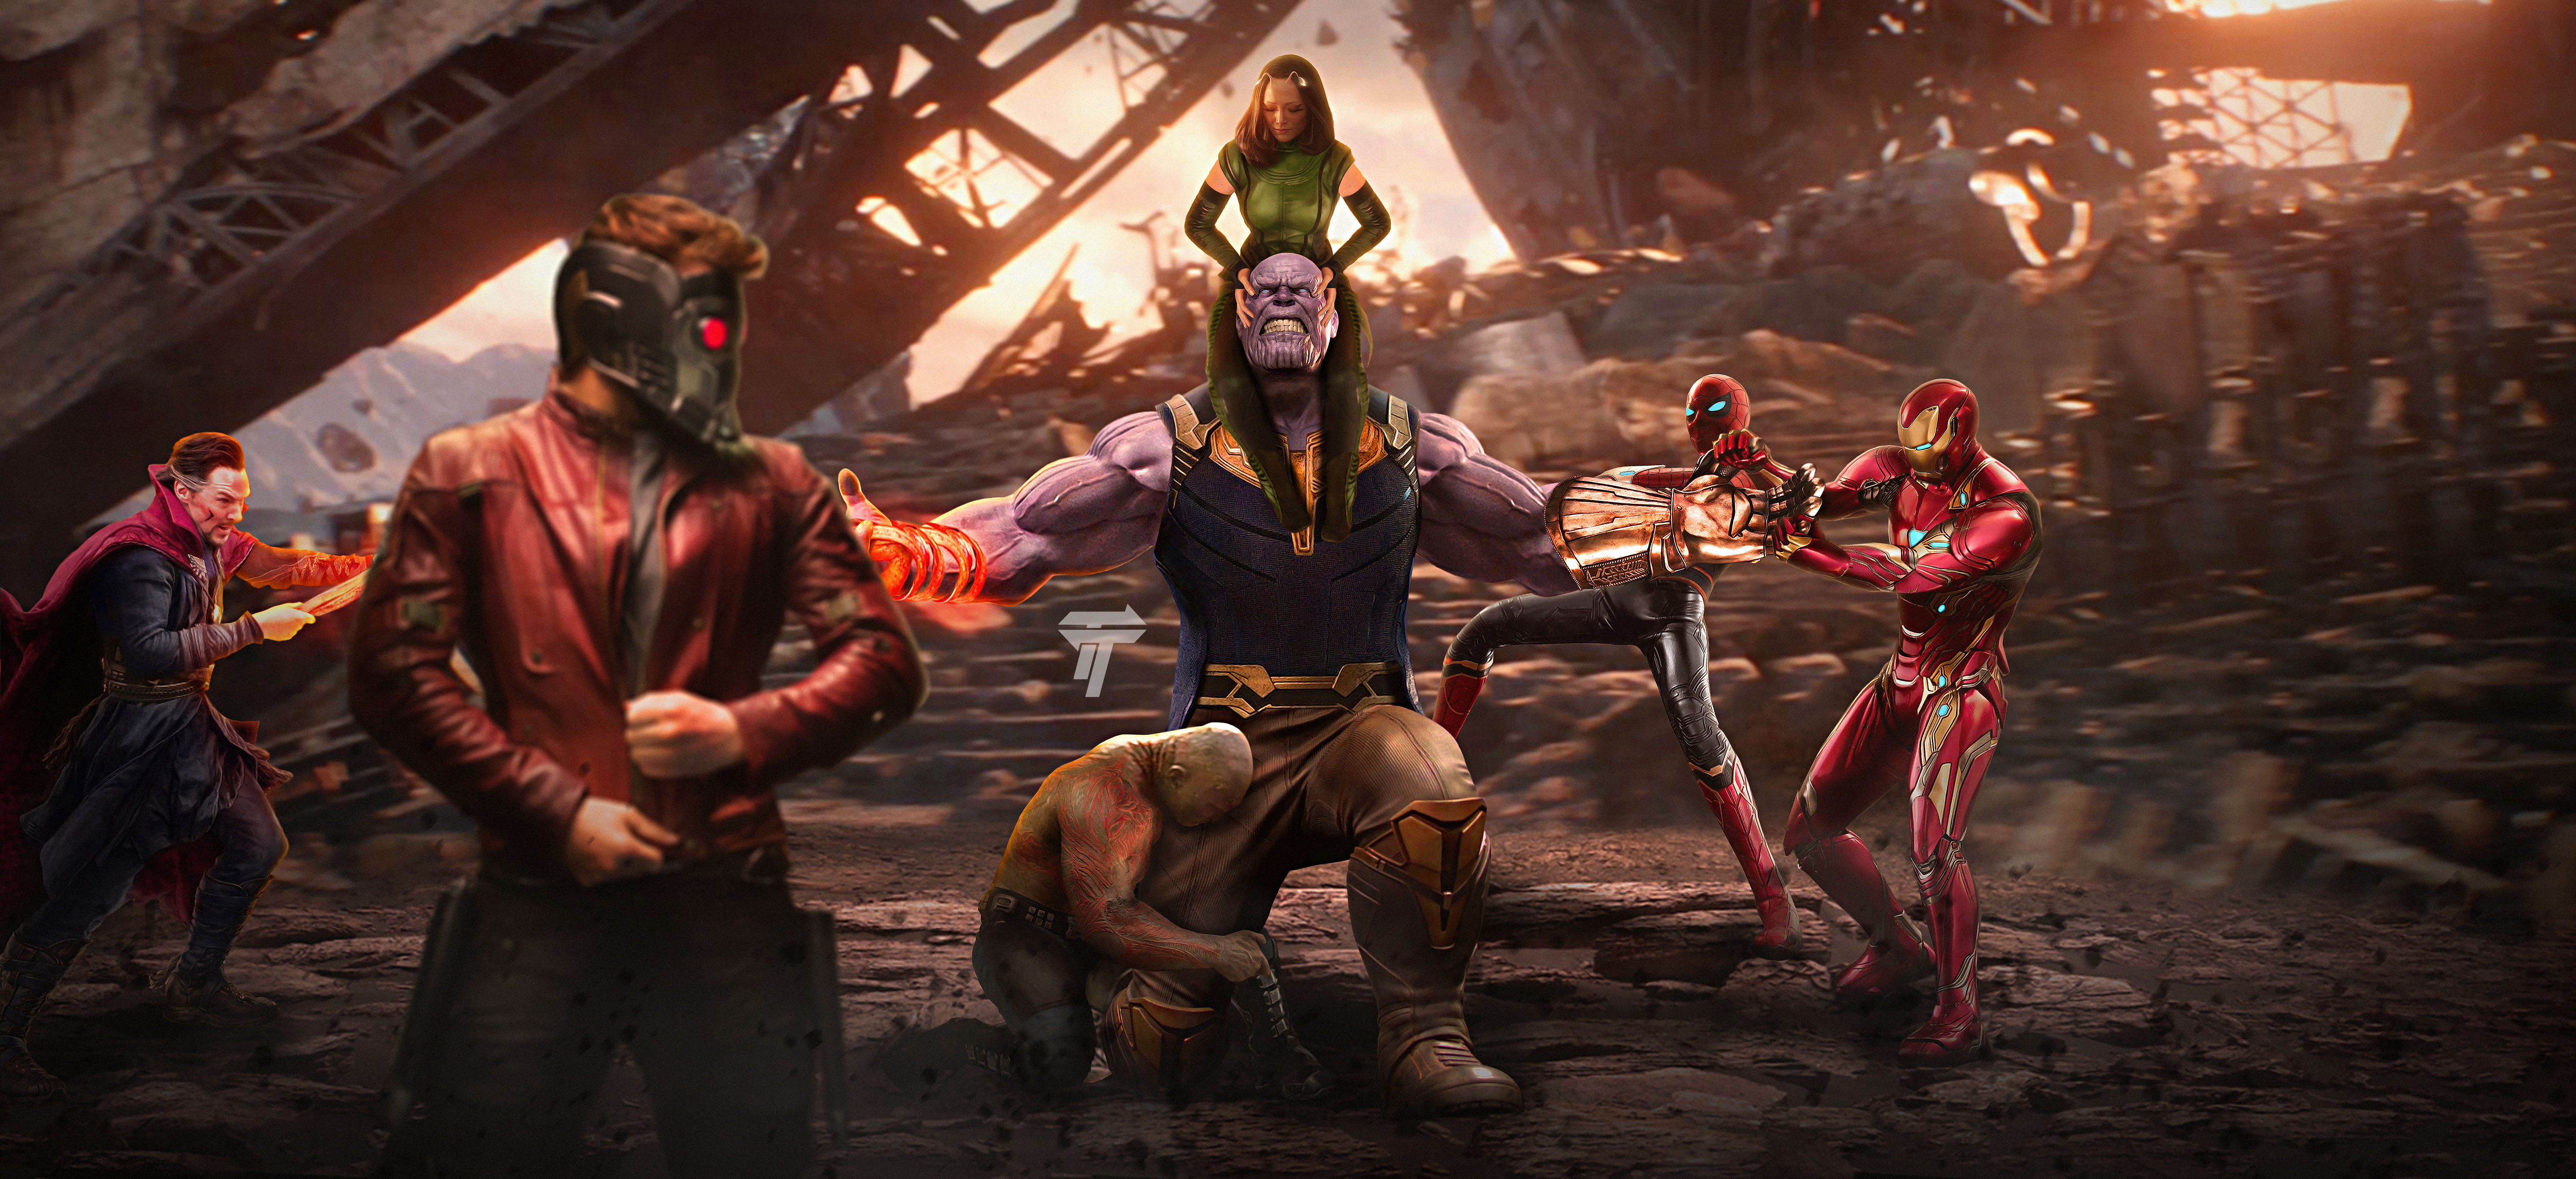 Thanos Star Lord Doctor Strange Drax The Destroyer Mantis Marvel Comics Spider Man Iron Man 6000x2747